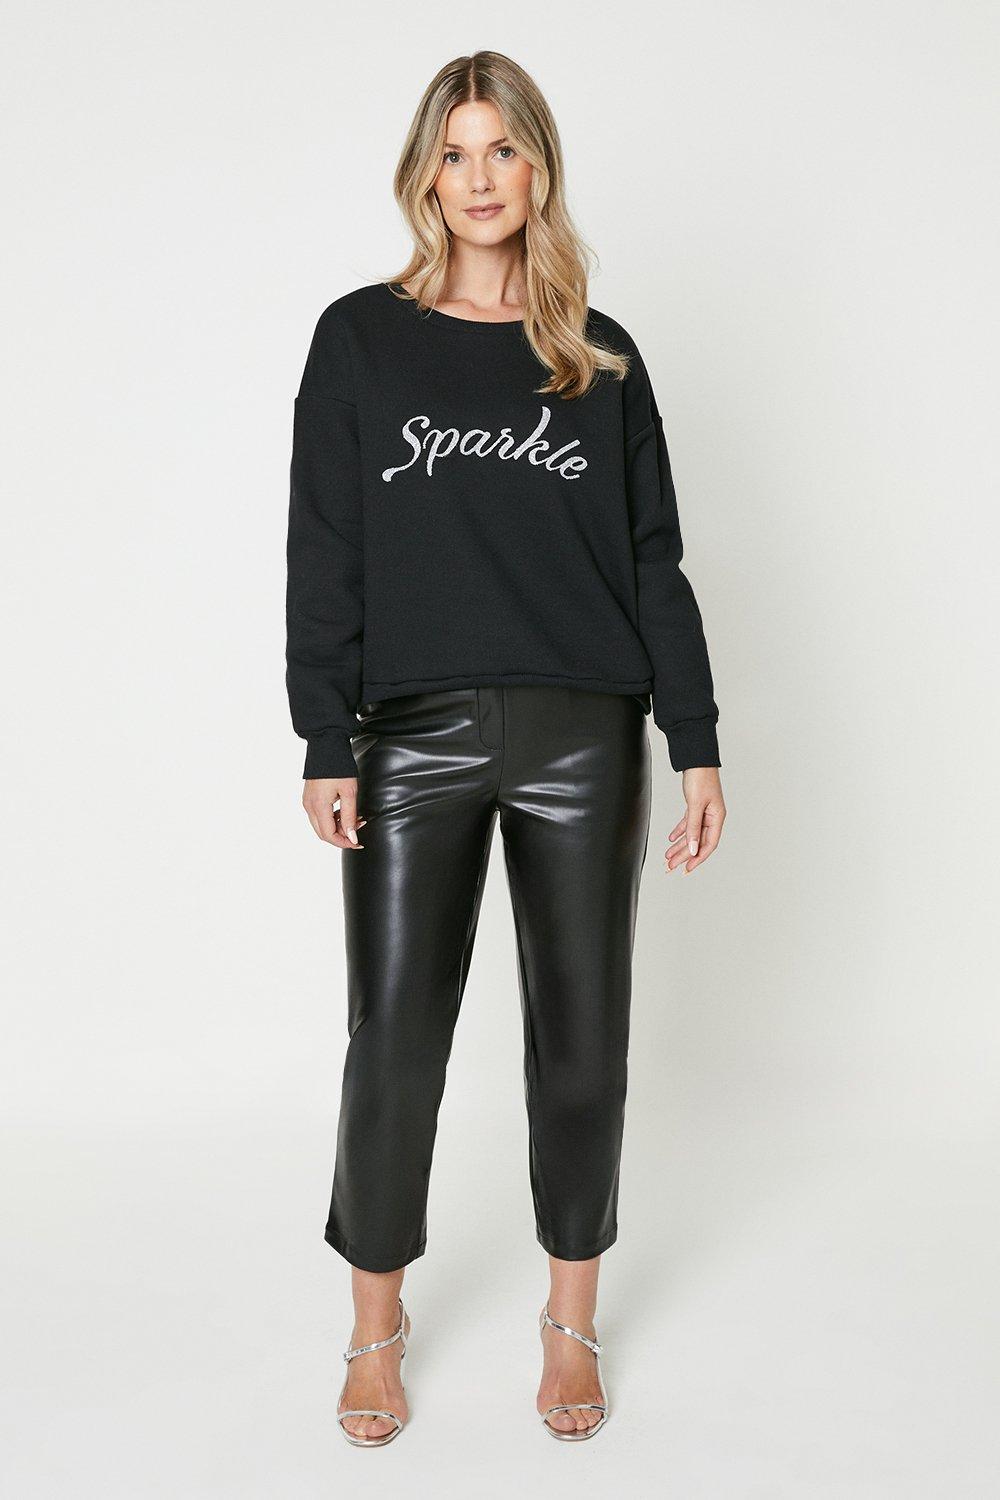 Women's Sparkle Glitter Puff Sleeve Sweatshirt - black - M